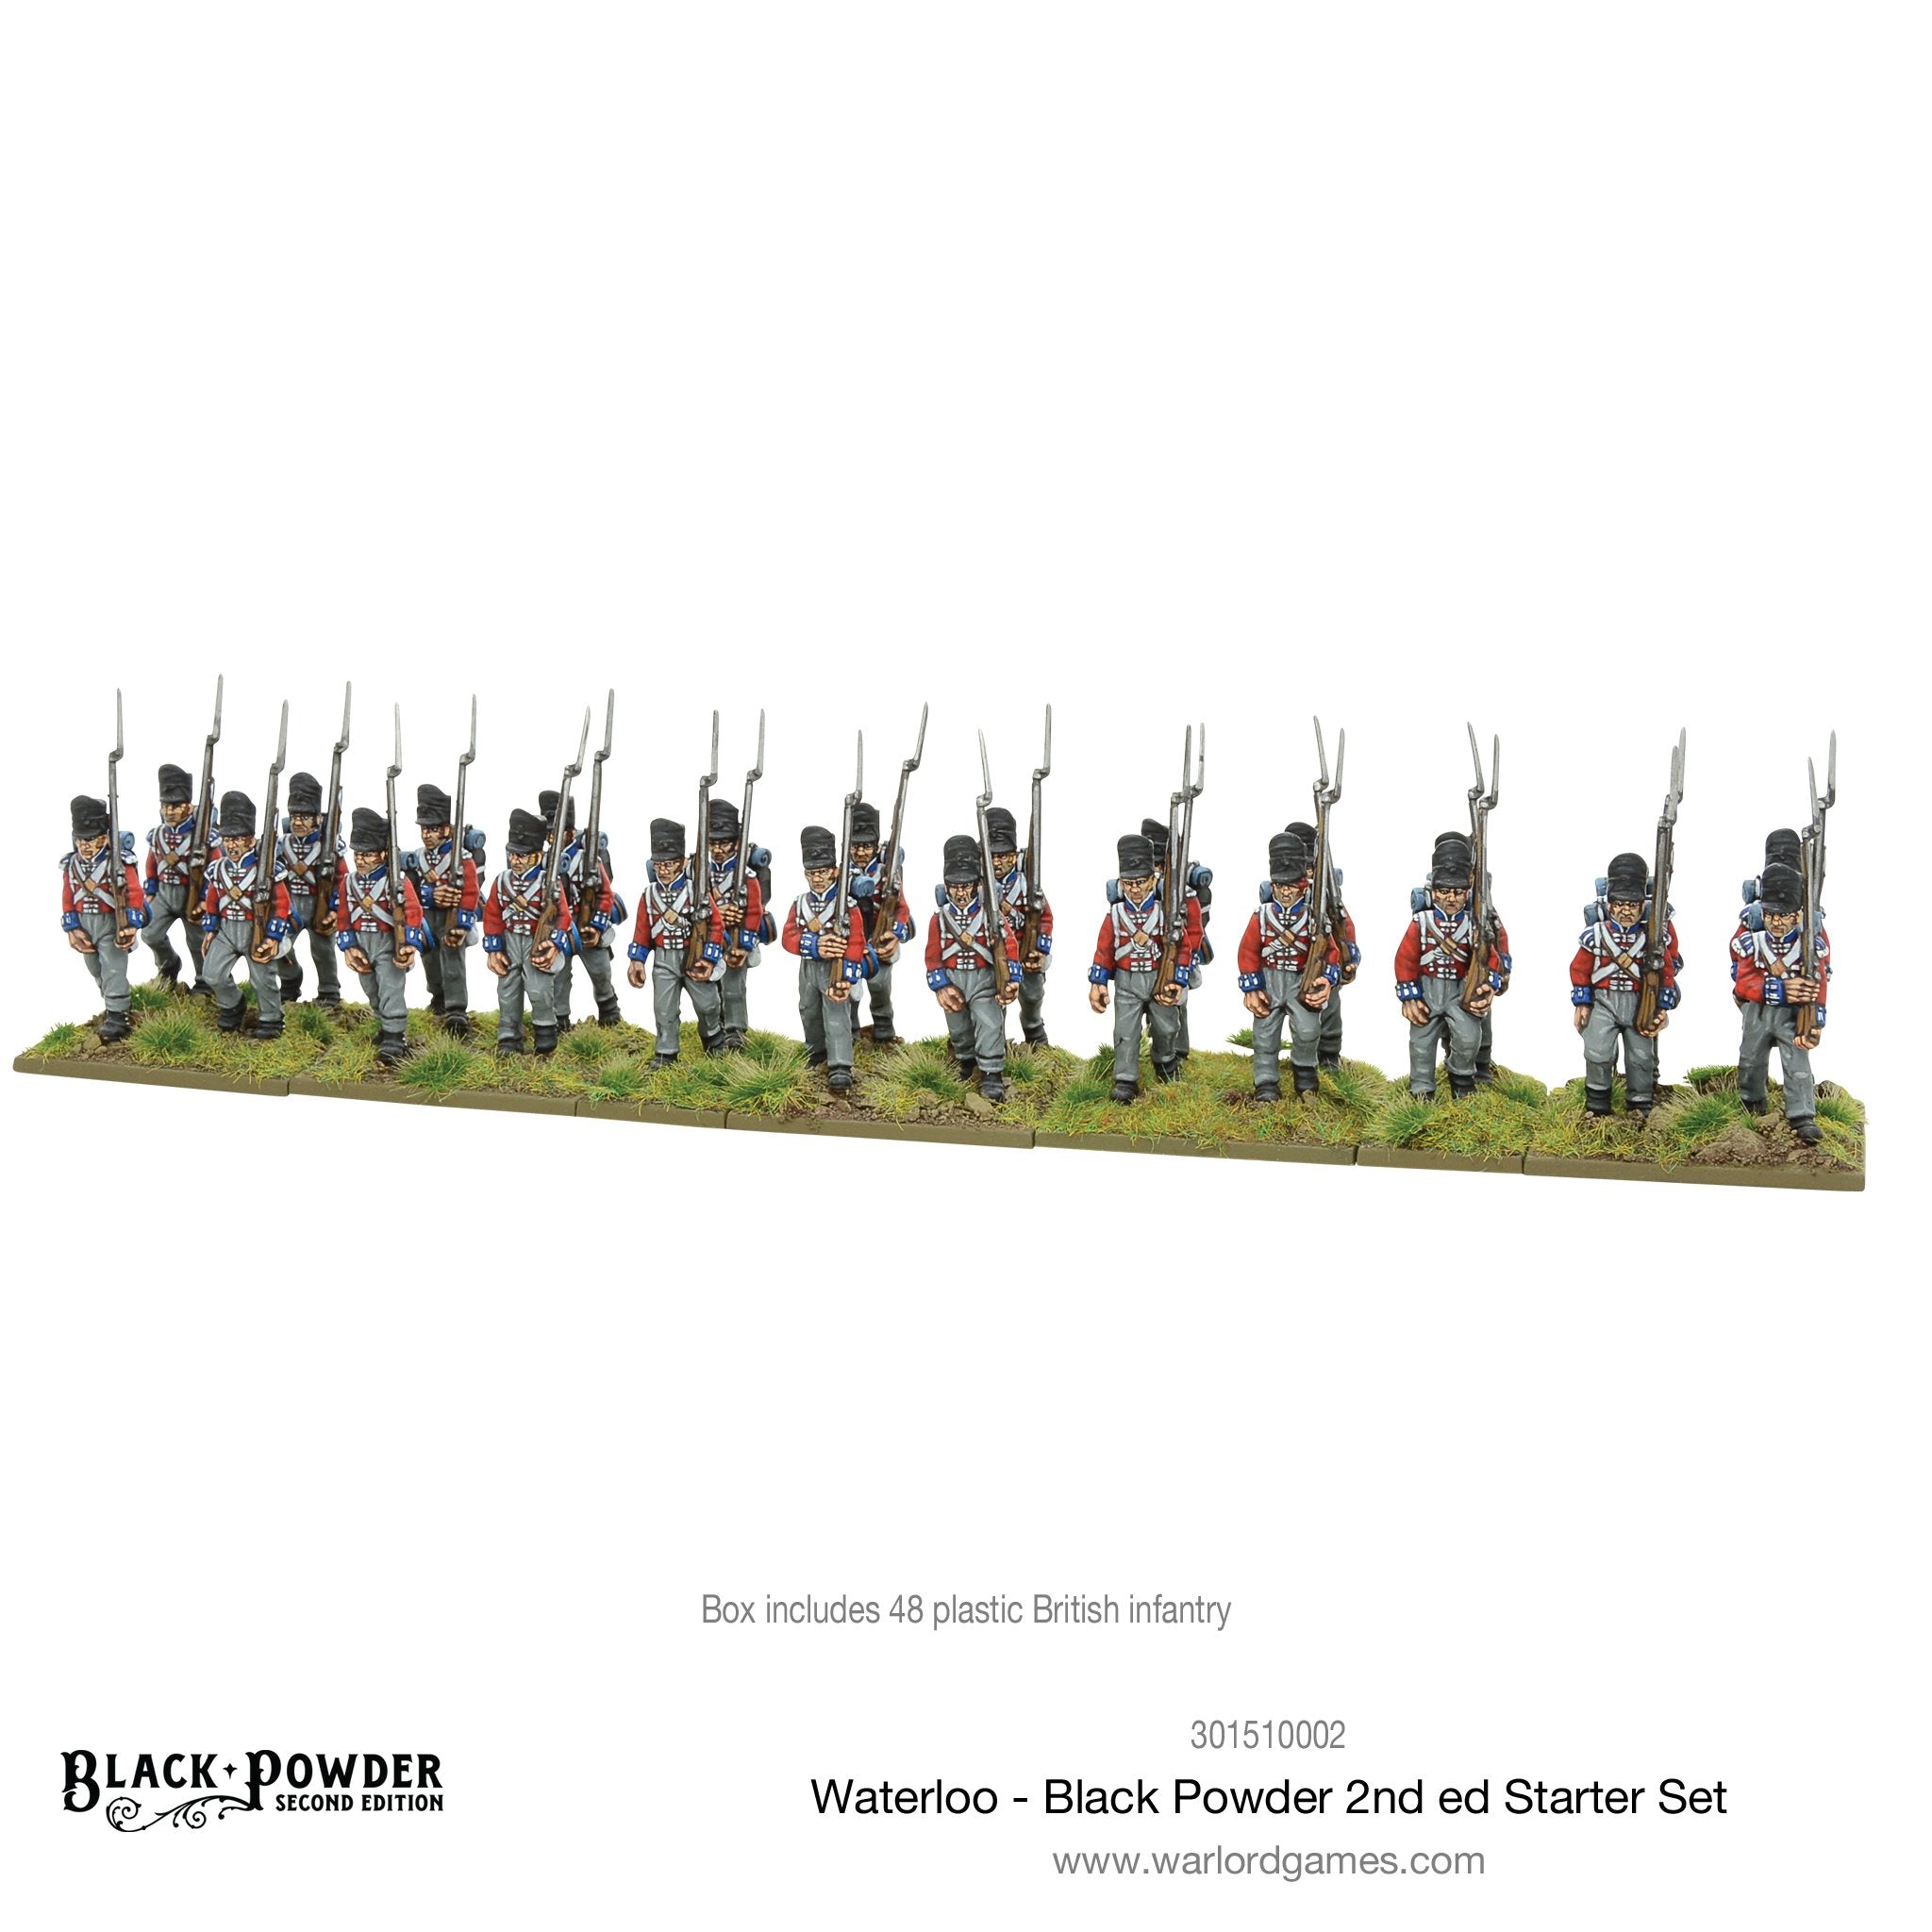 Waterloo - Black Powder 2nd edition Starter Set (German Edition)